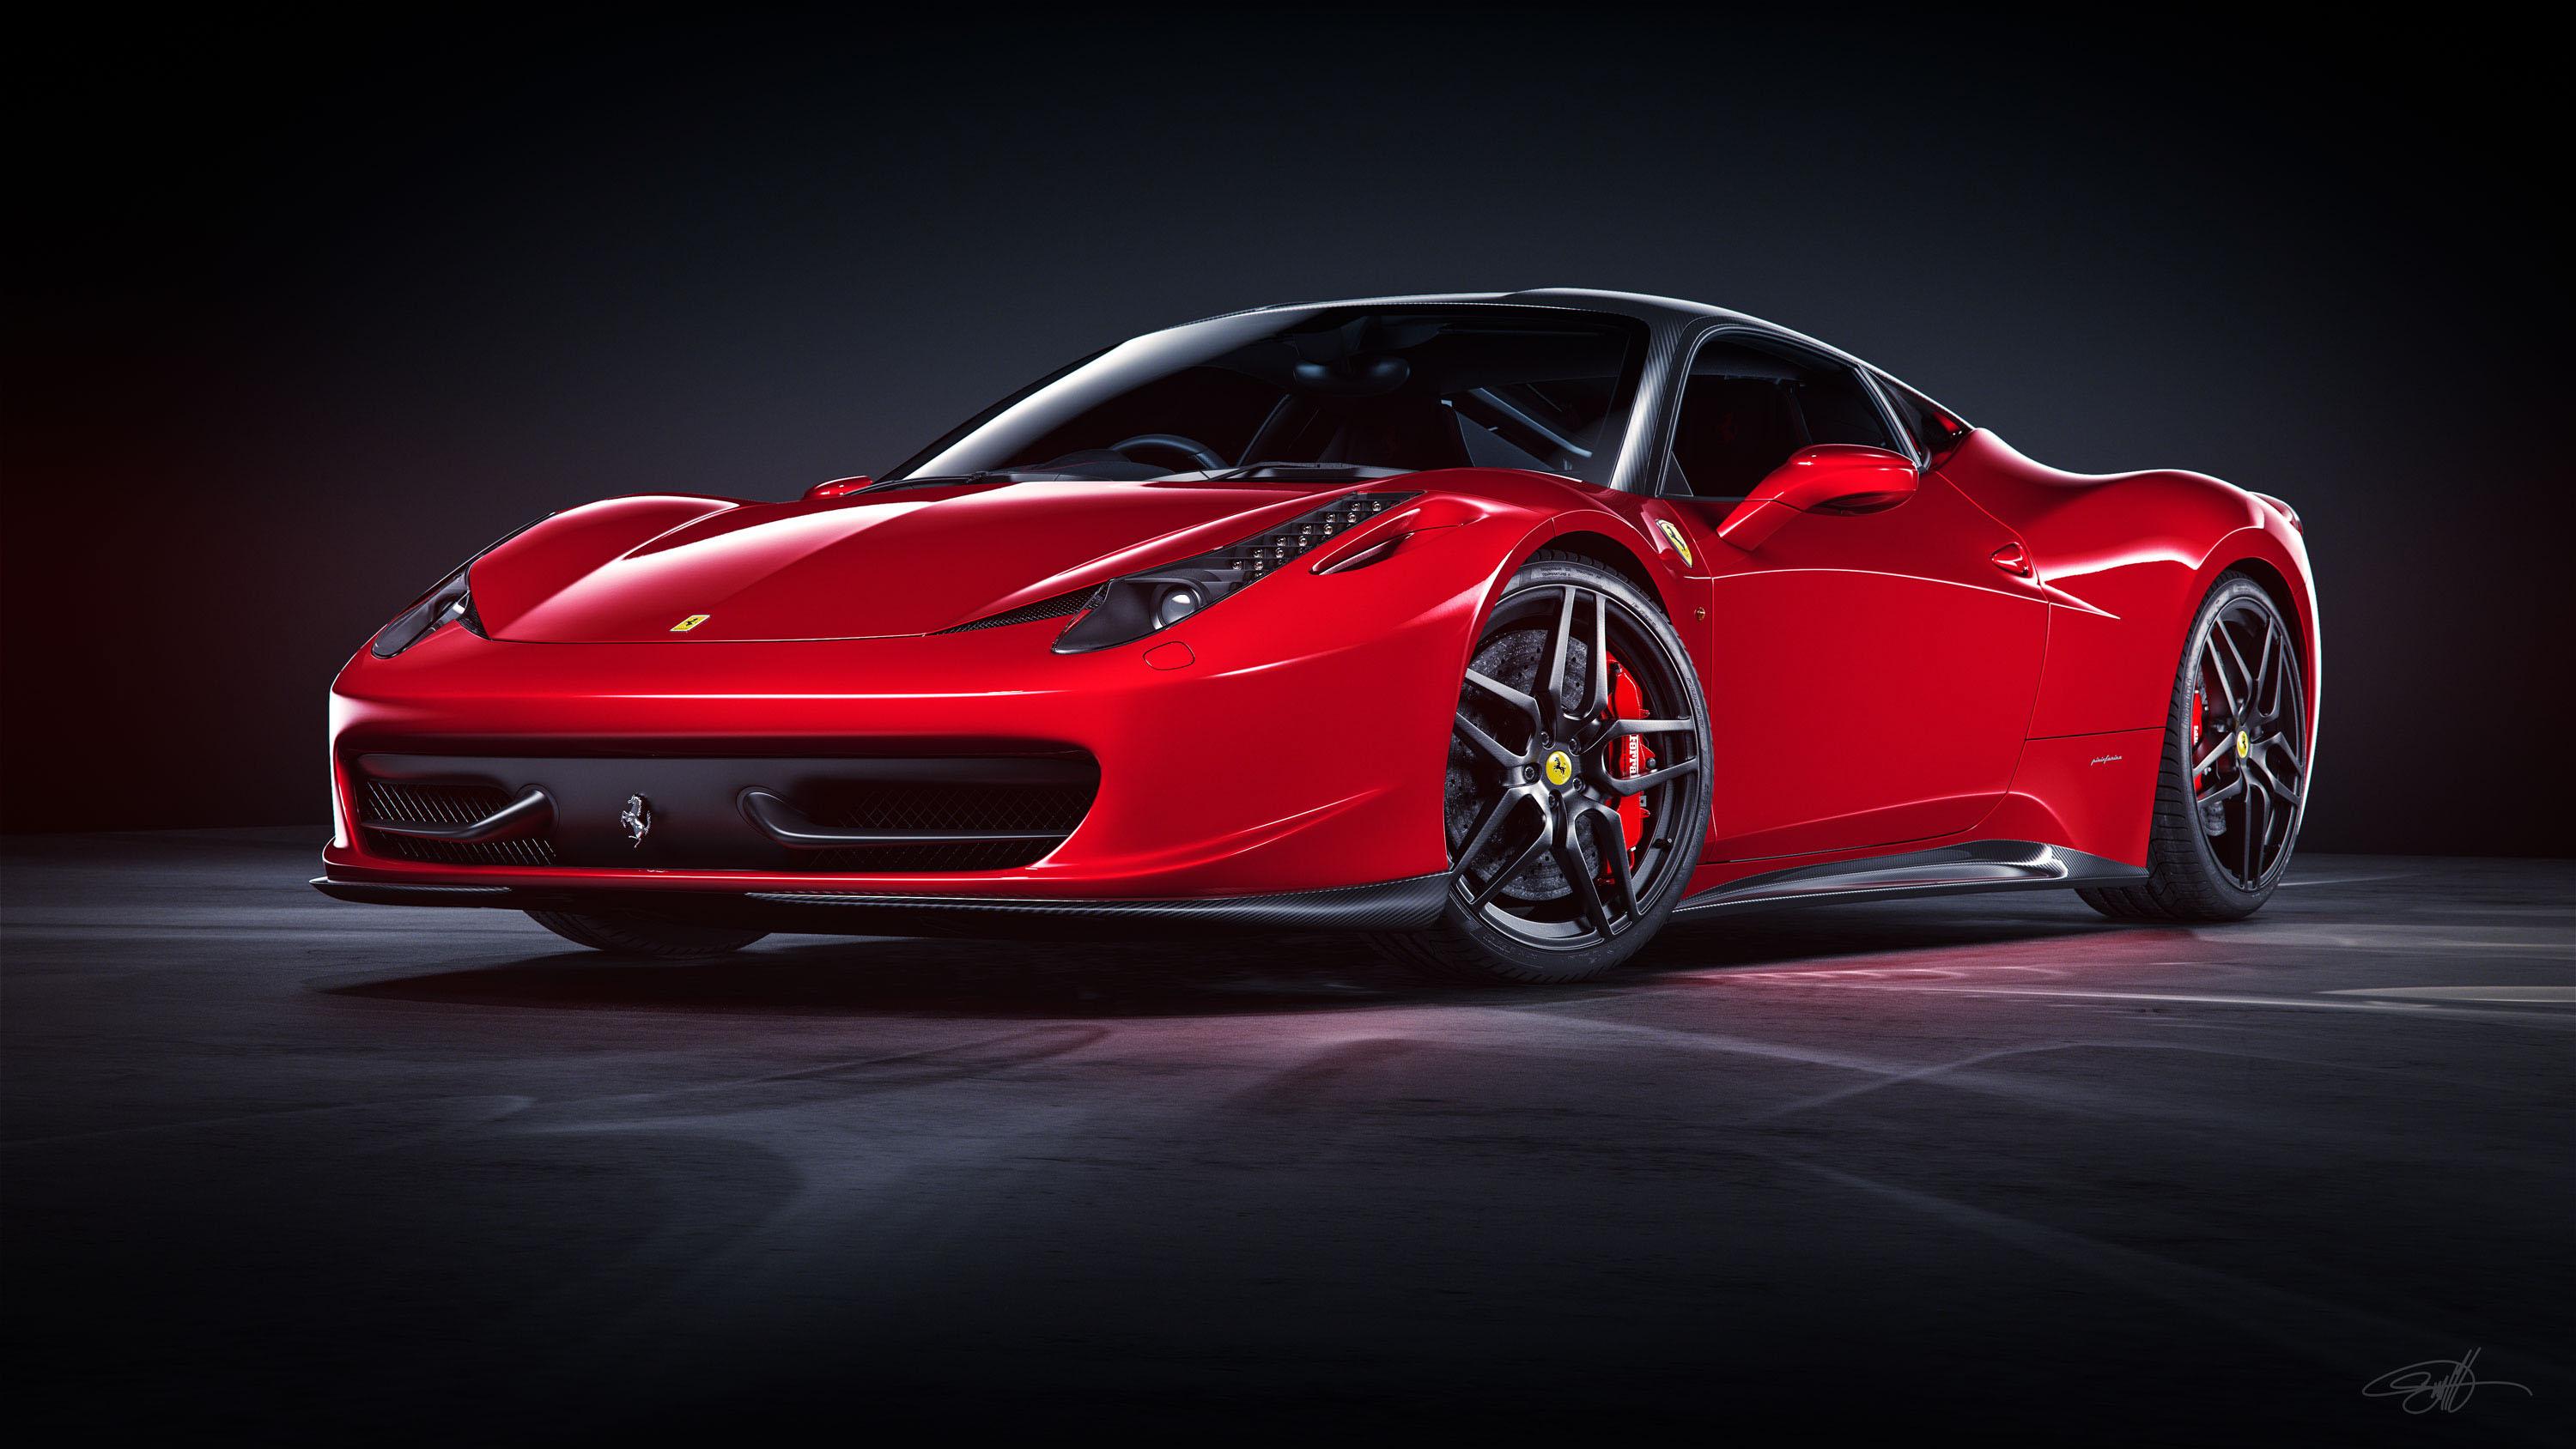 3000 x 1688 · jpeg - Ferrari 458 Italia Red 2018, HD Cars, 4k Wallpapers, Images ...